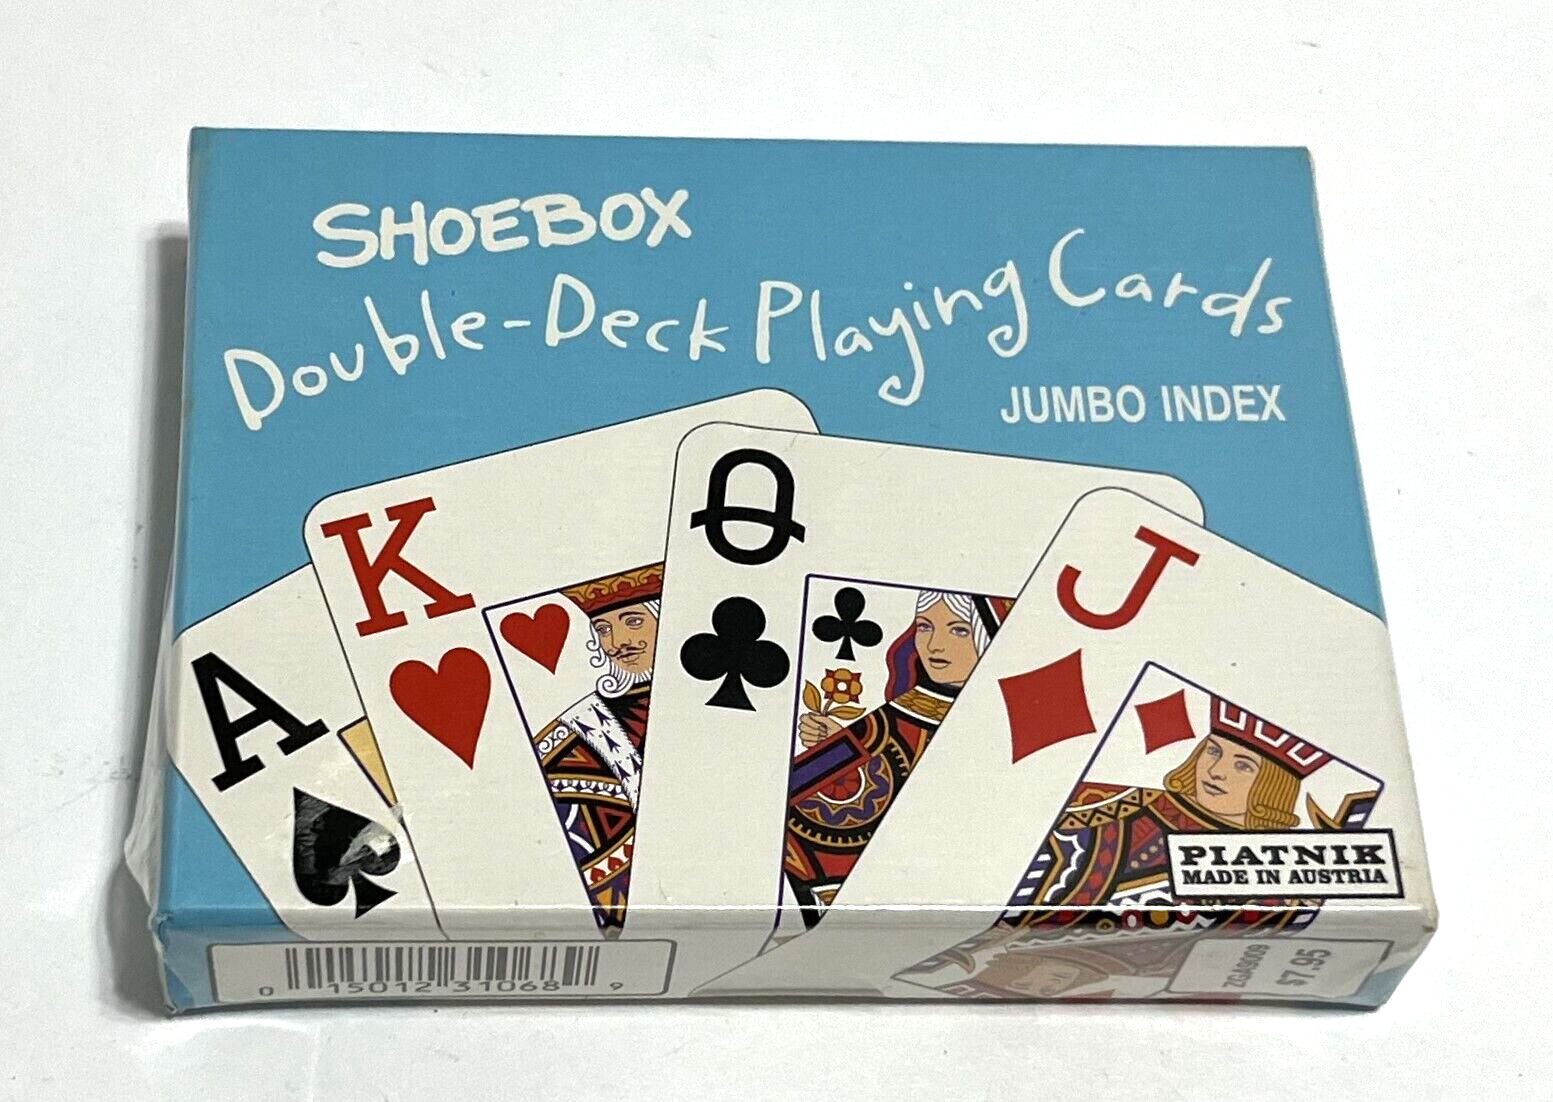 HALLMARK Shoebox Double-Deck Playing Cards Jumbo Index Piatnik Austria NEW